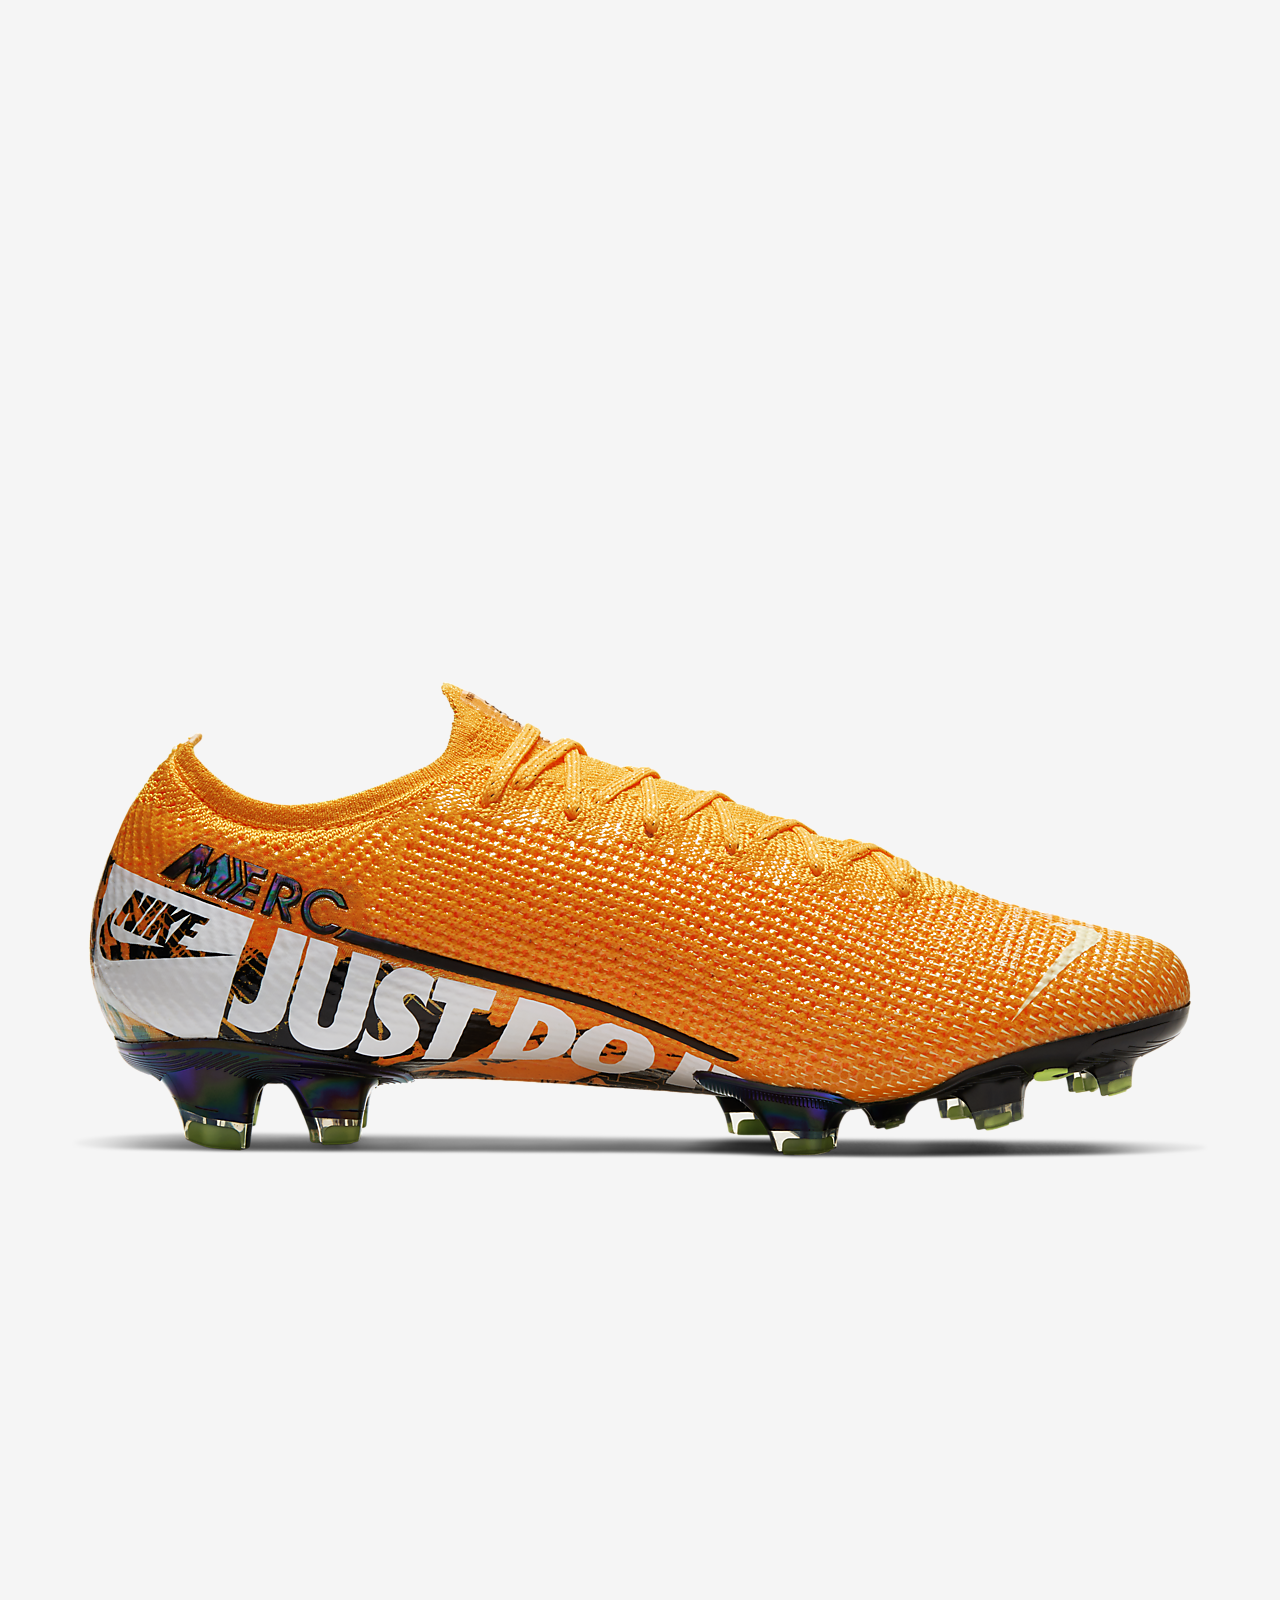 Buy Cheap Nike Mercurial Vapor 13 Football Boots Fake Sale